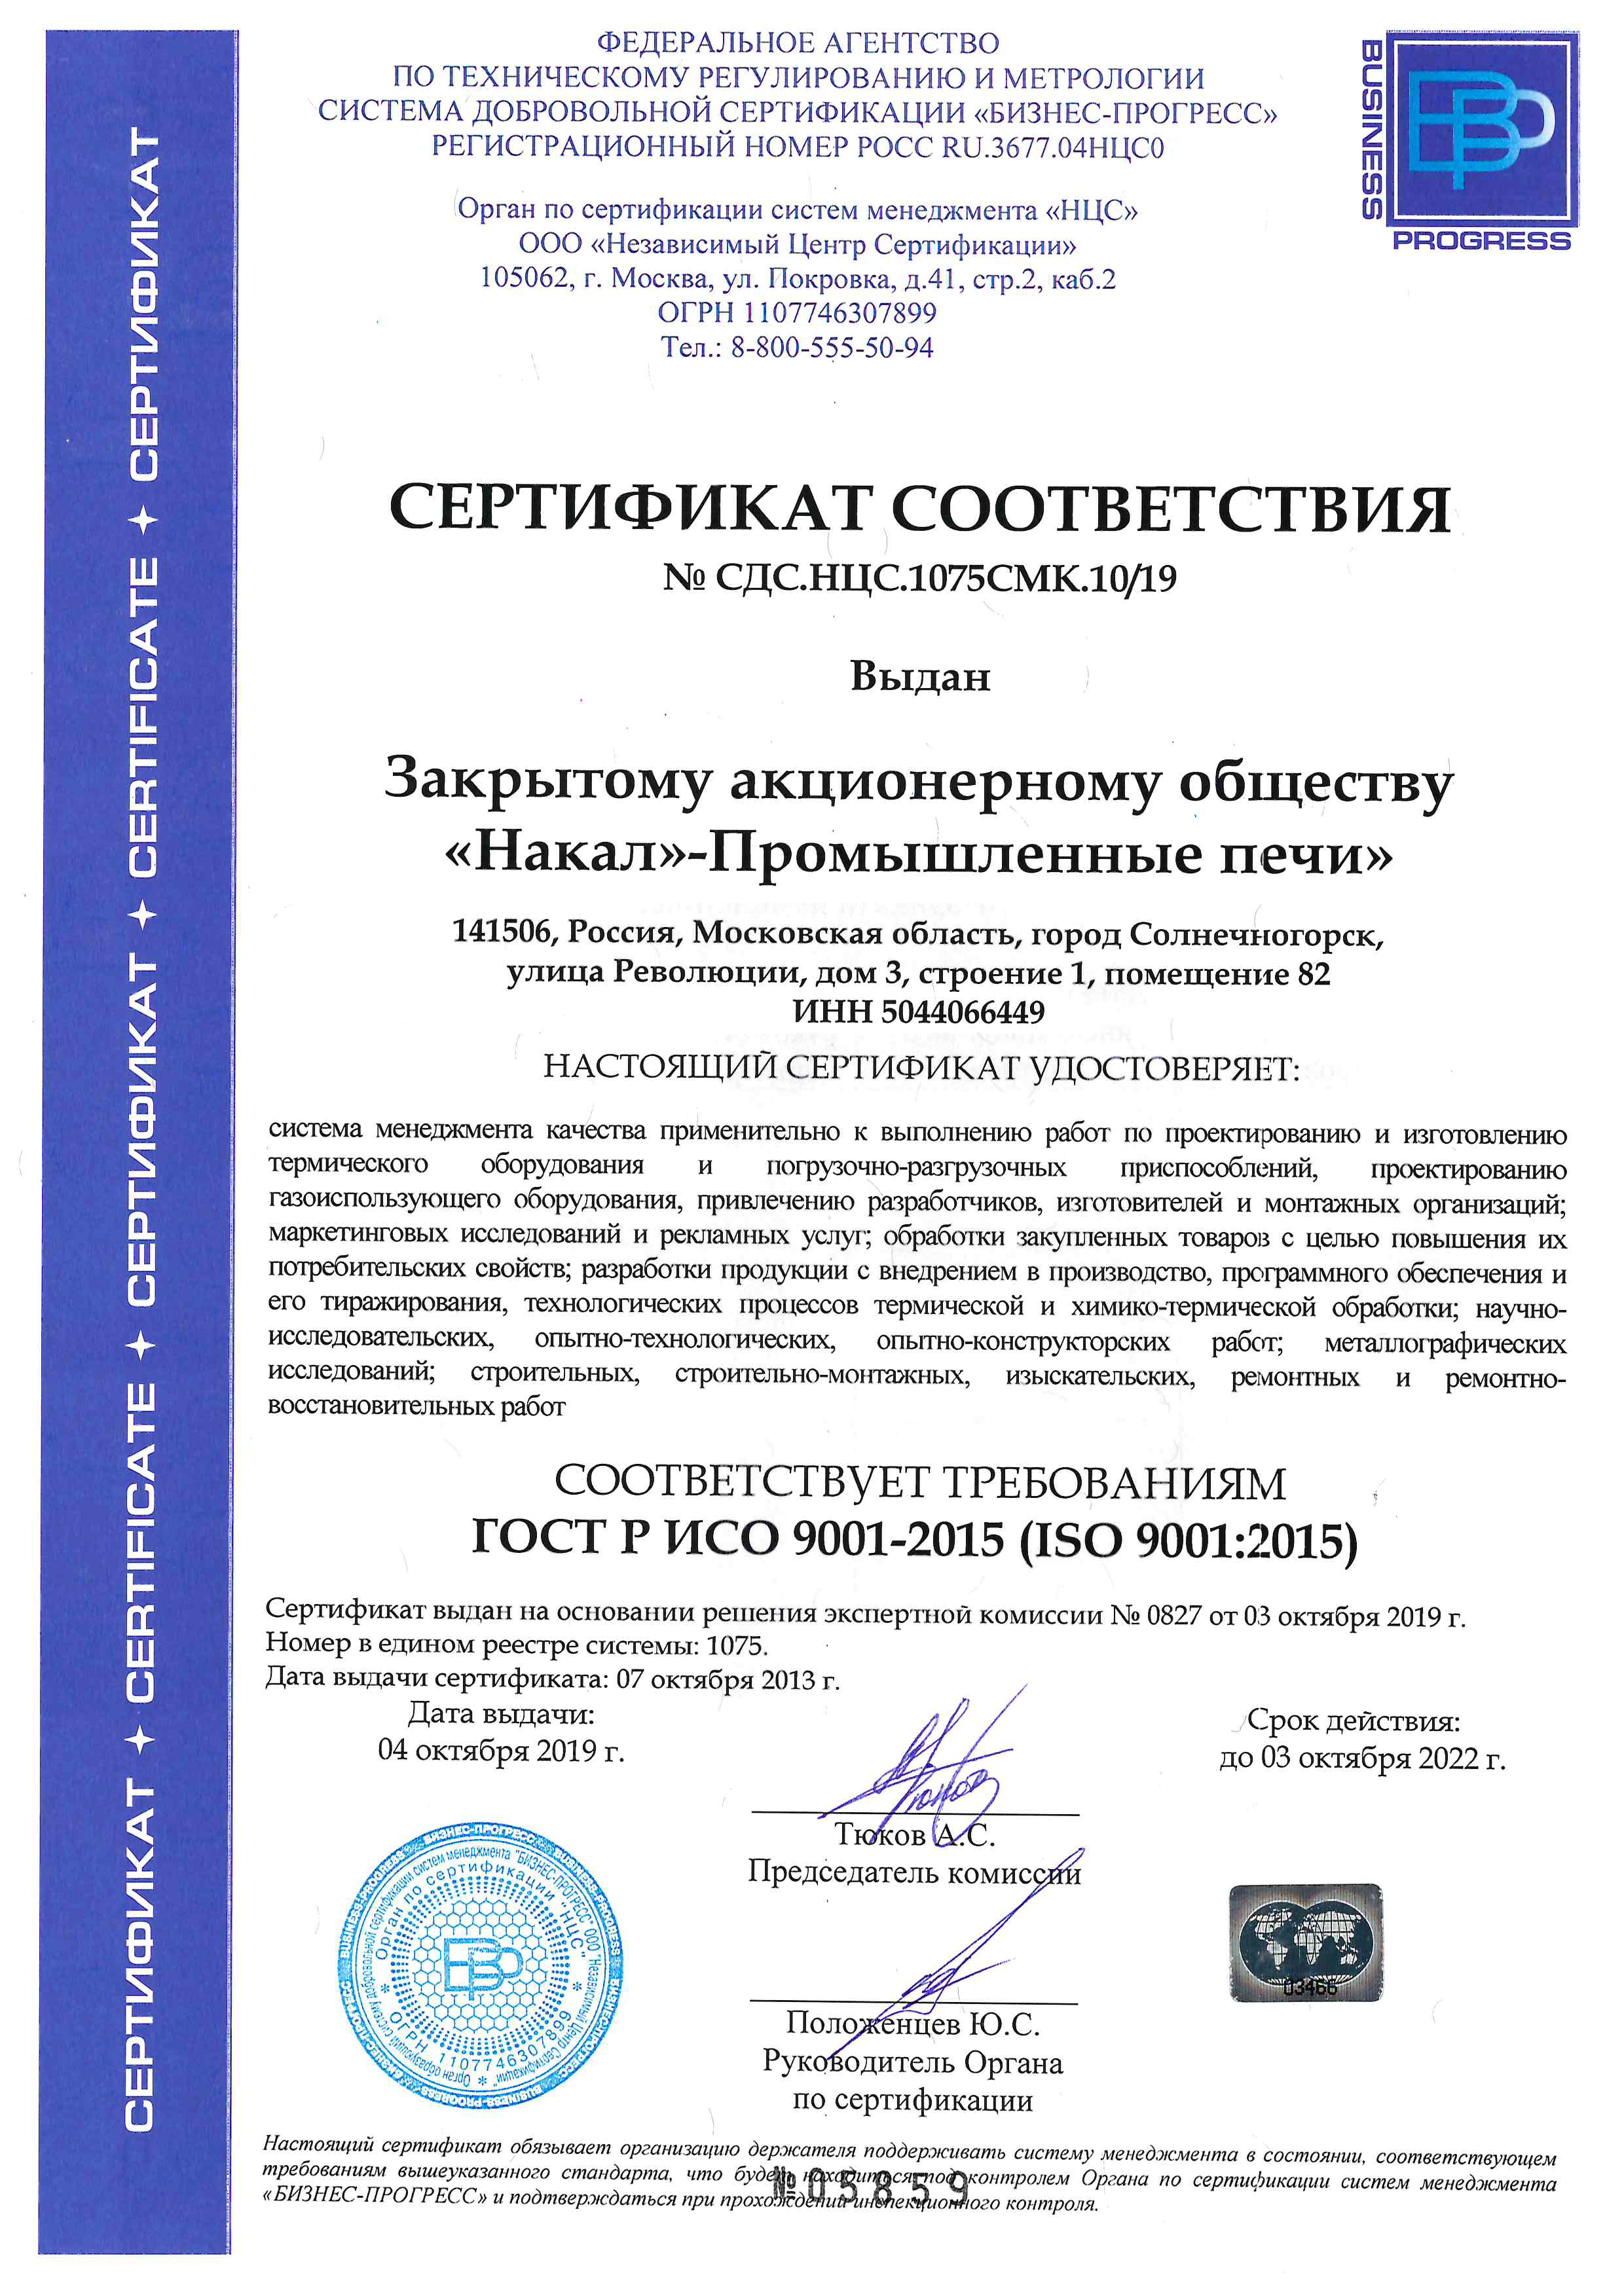 Сертификат соответствия стандарту ГОСТ ISO 9001-2015